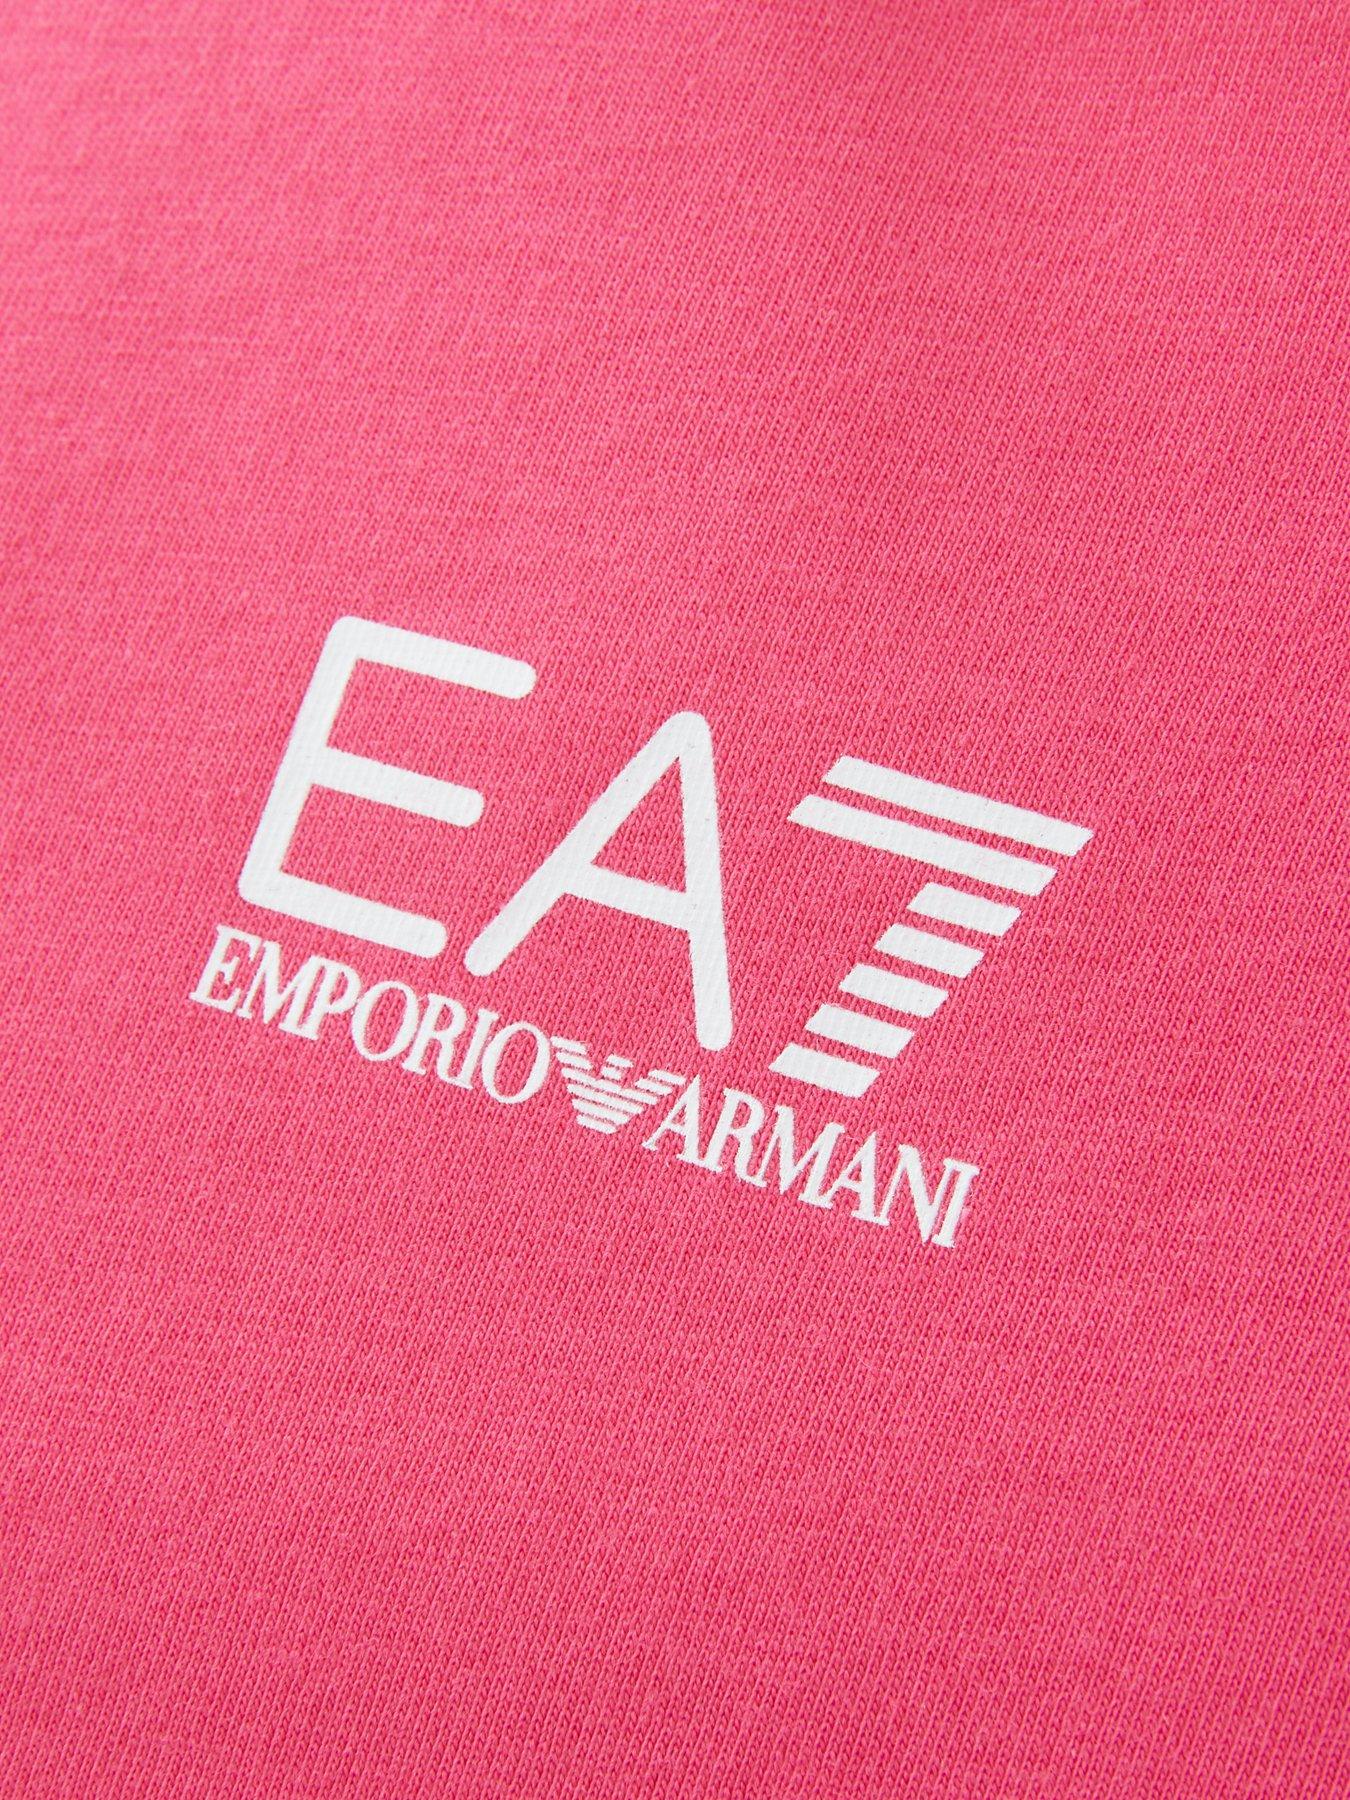 Emporio Armani - Emporio Armani Brand Logo Leggings